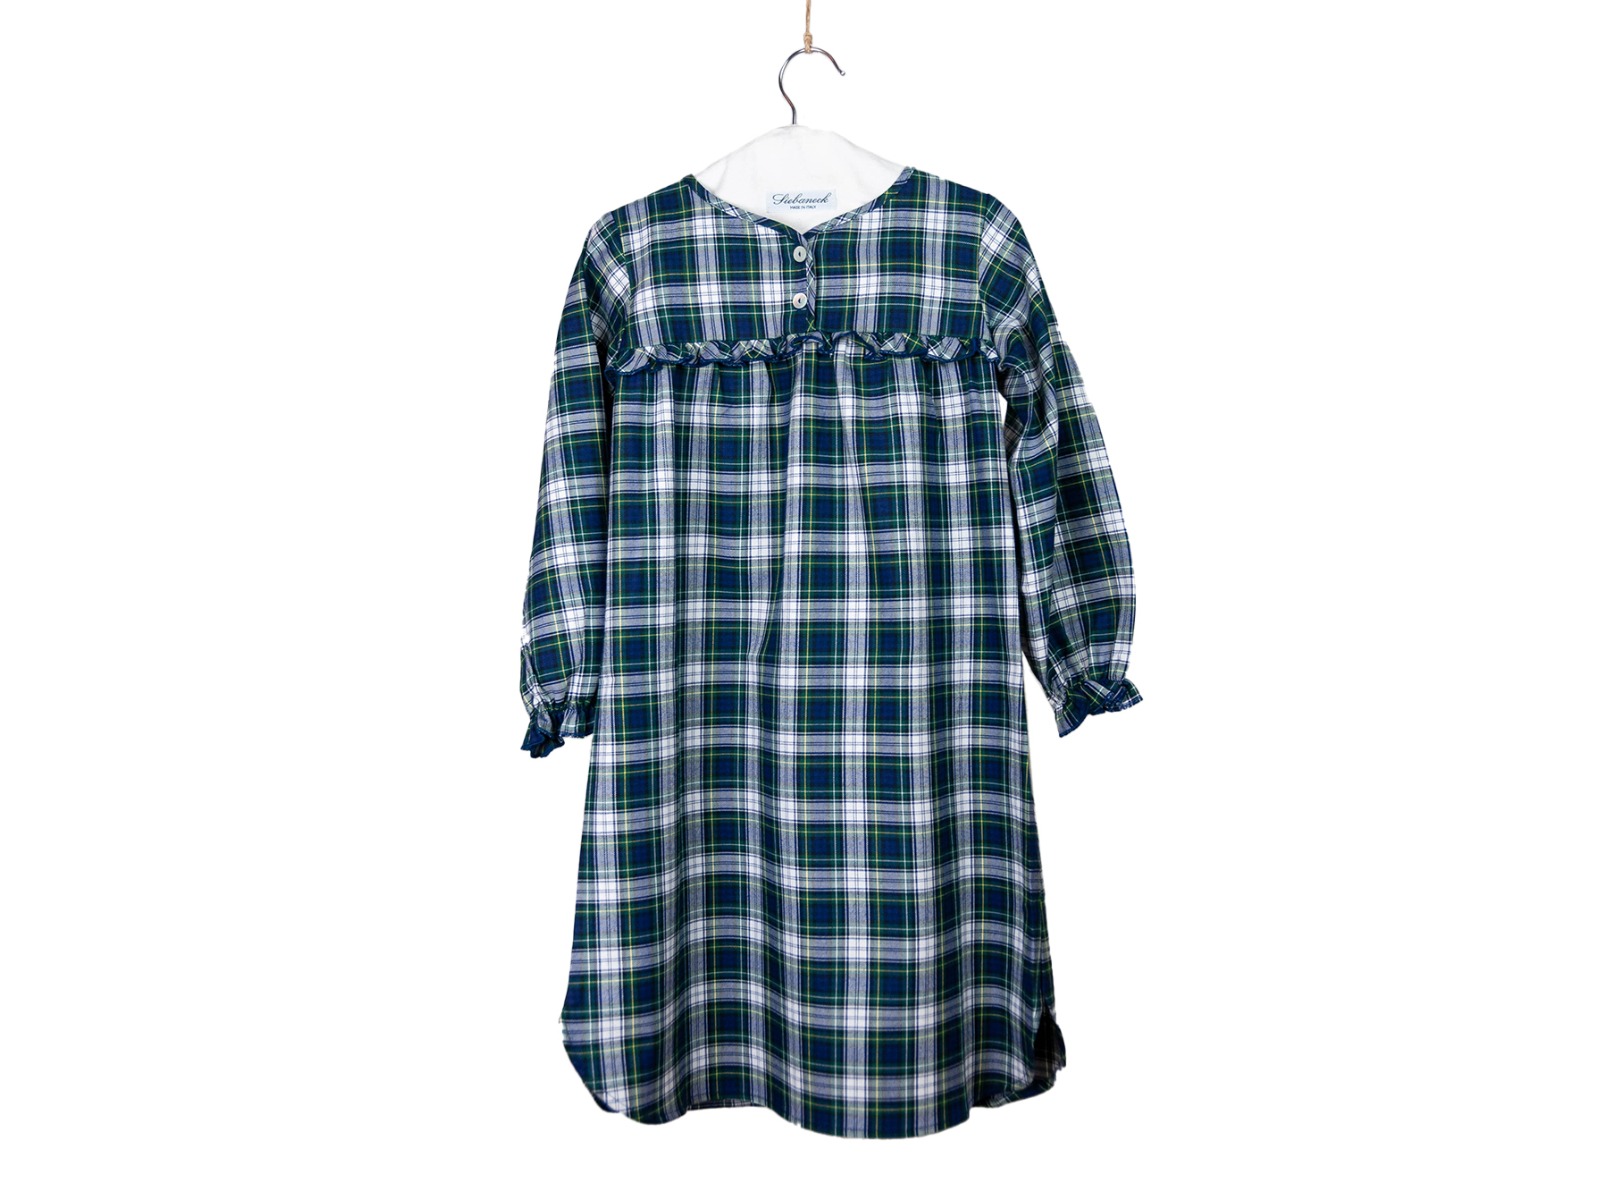 Siebaneck, i pigiami artigianali italiani: - bambina - mod. 89 Bimba bianco /blu e verde 